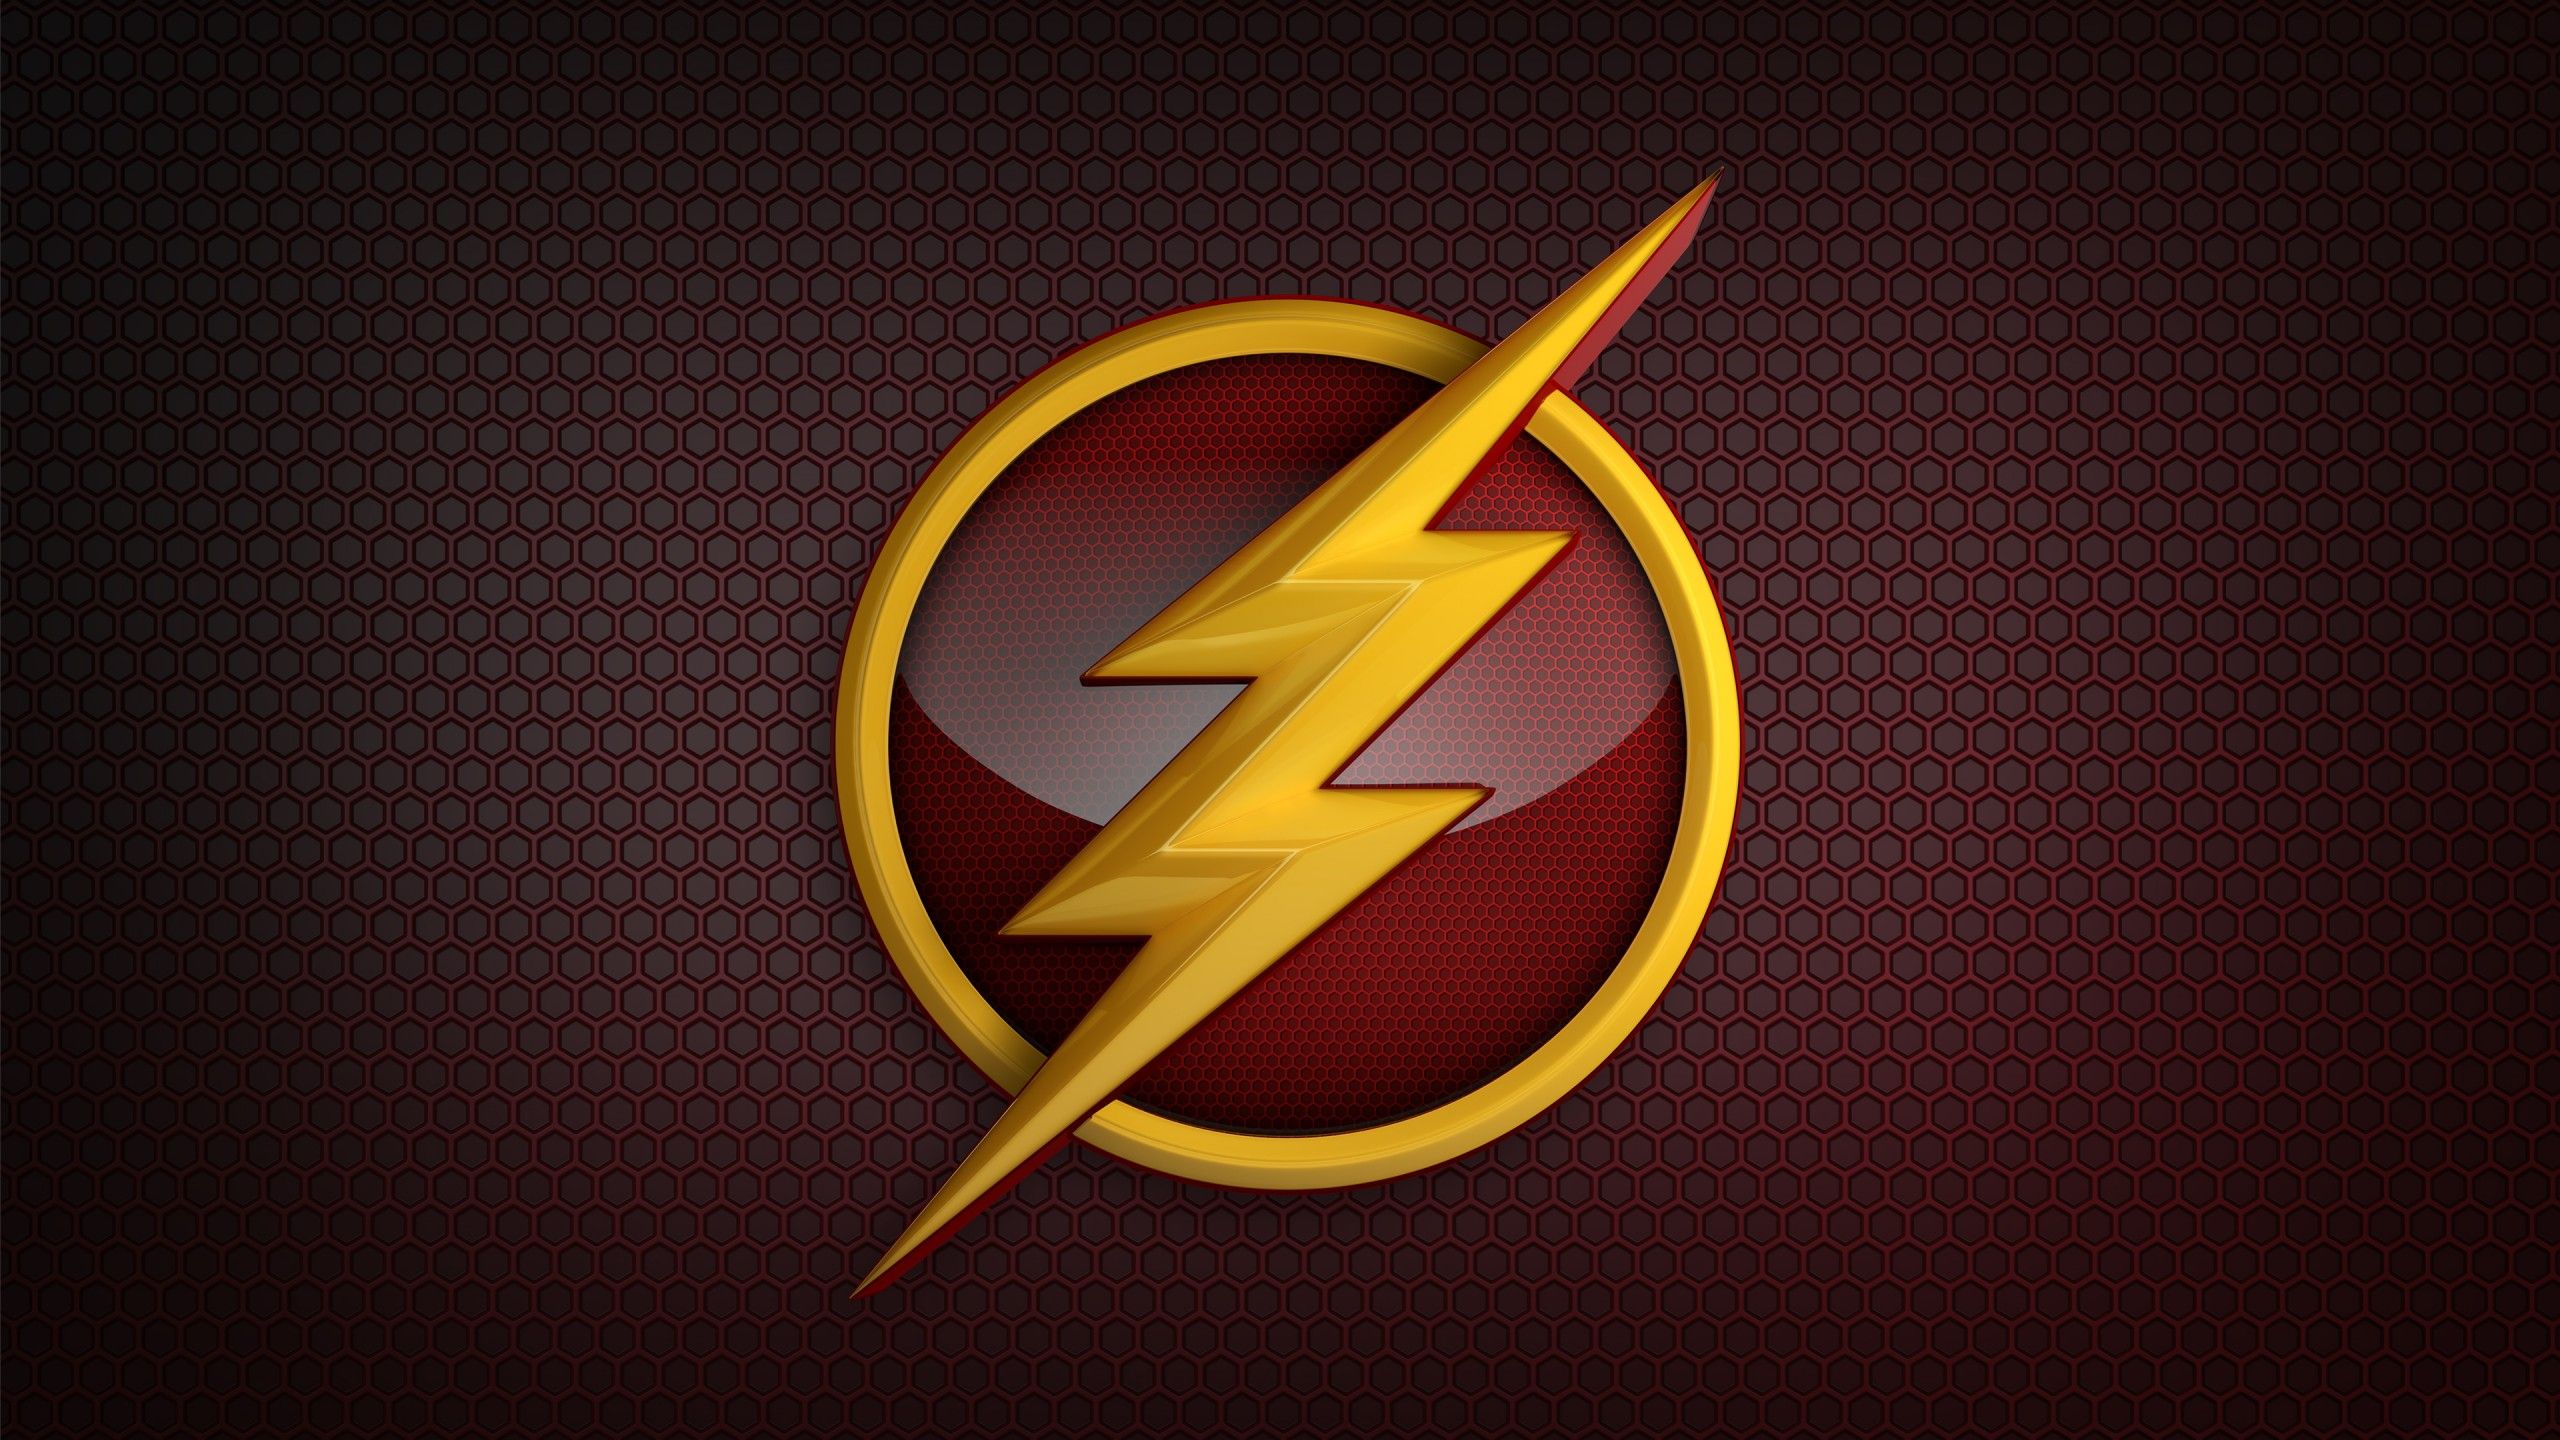 The Flash Lightning Bolt 4K Wallpaper